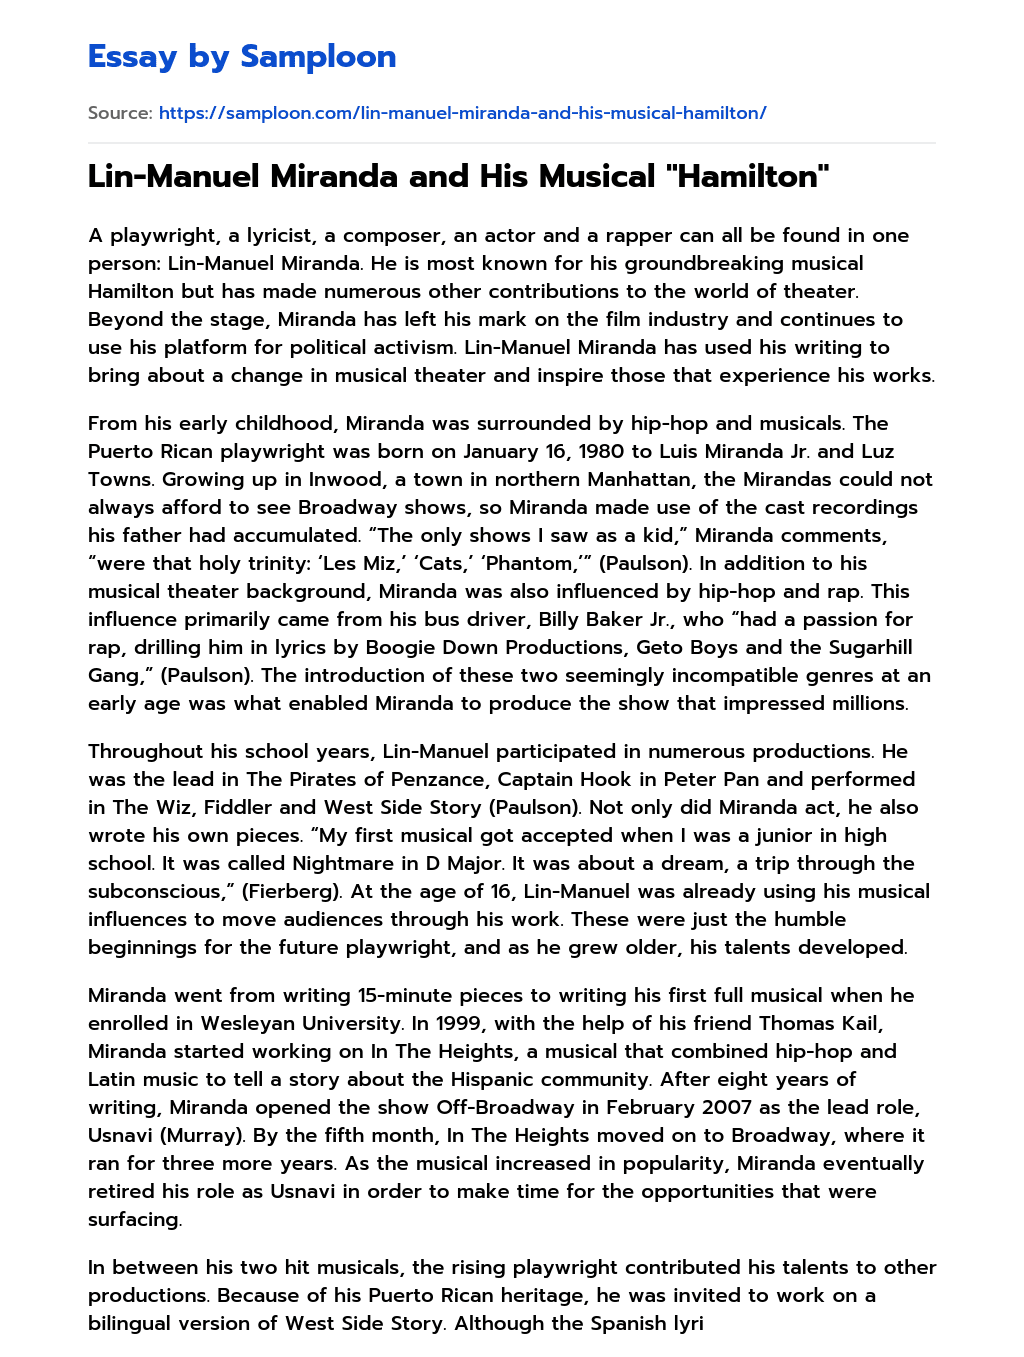 Lin-Manuel Miranda and His Musical “Hamilton” essay